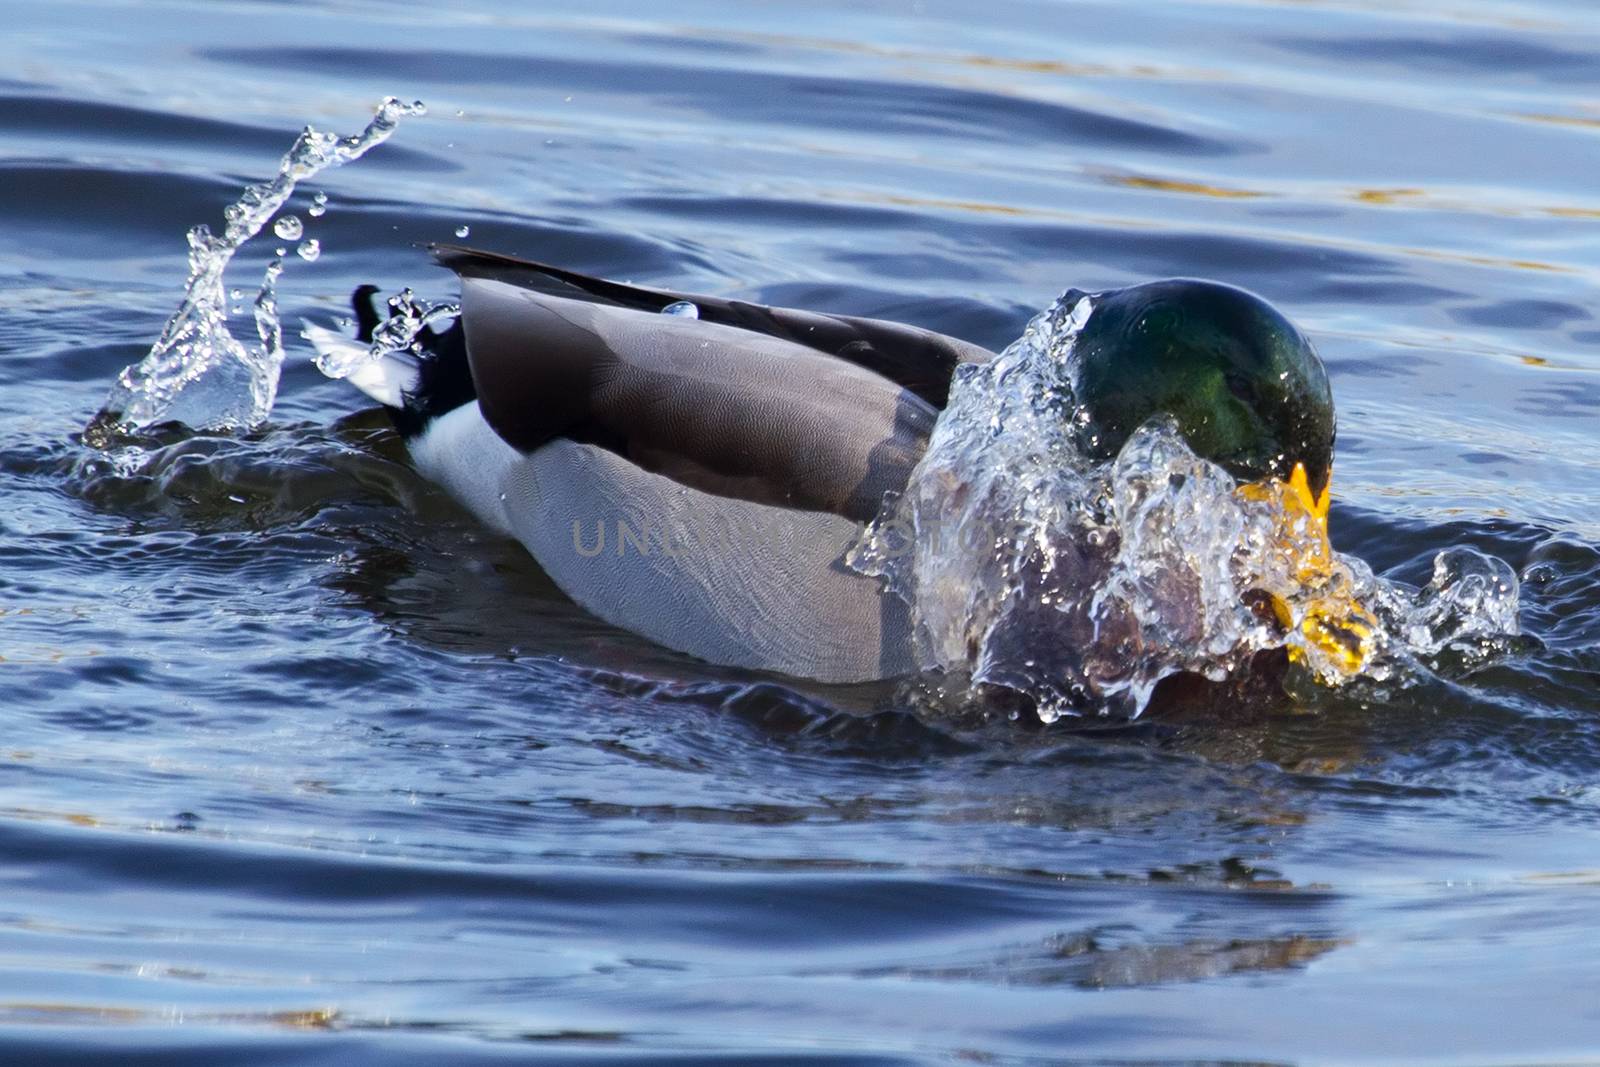 Mallard duck splashing in a small pond.